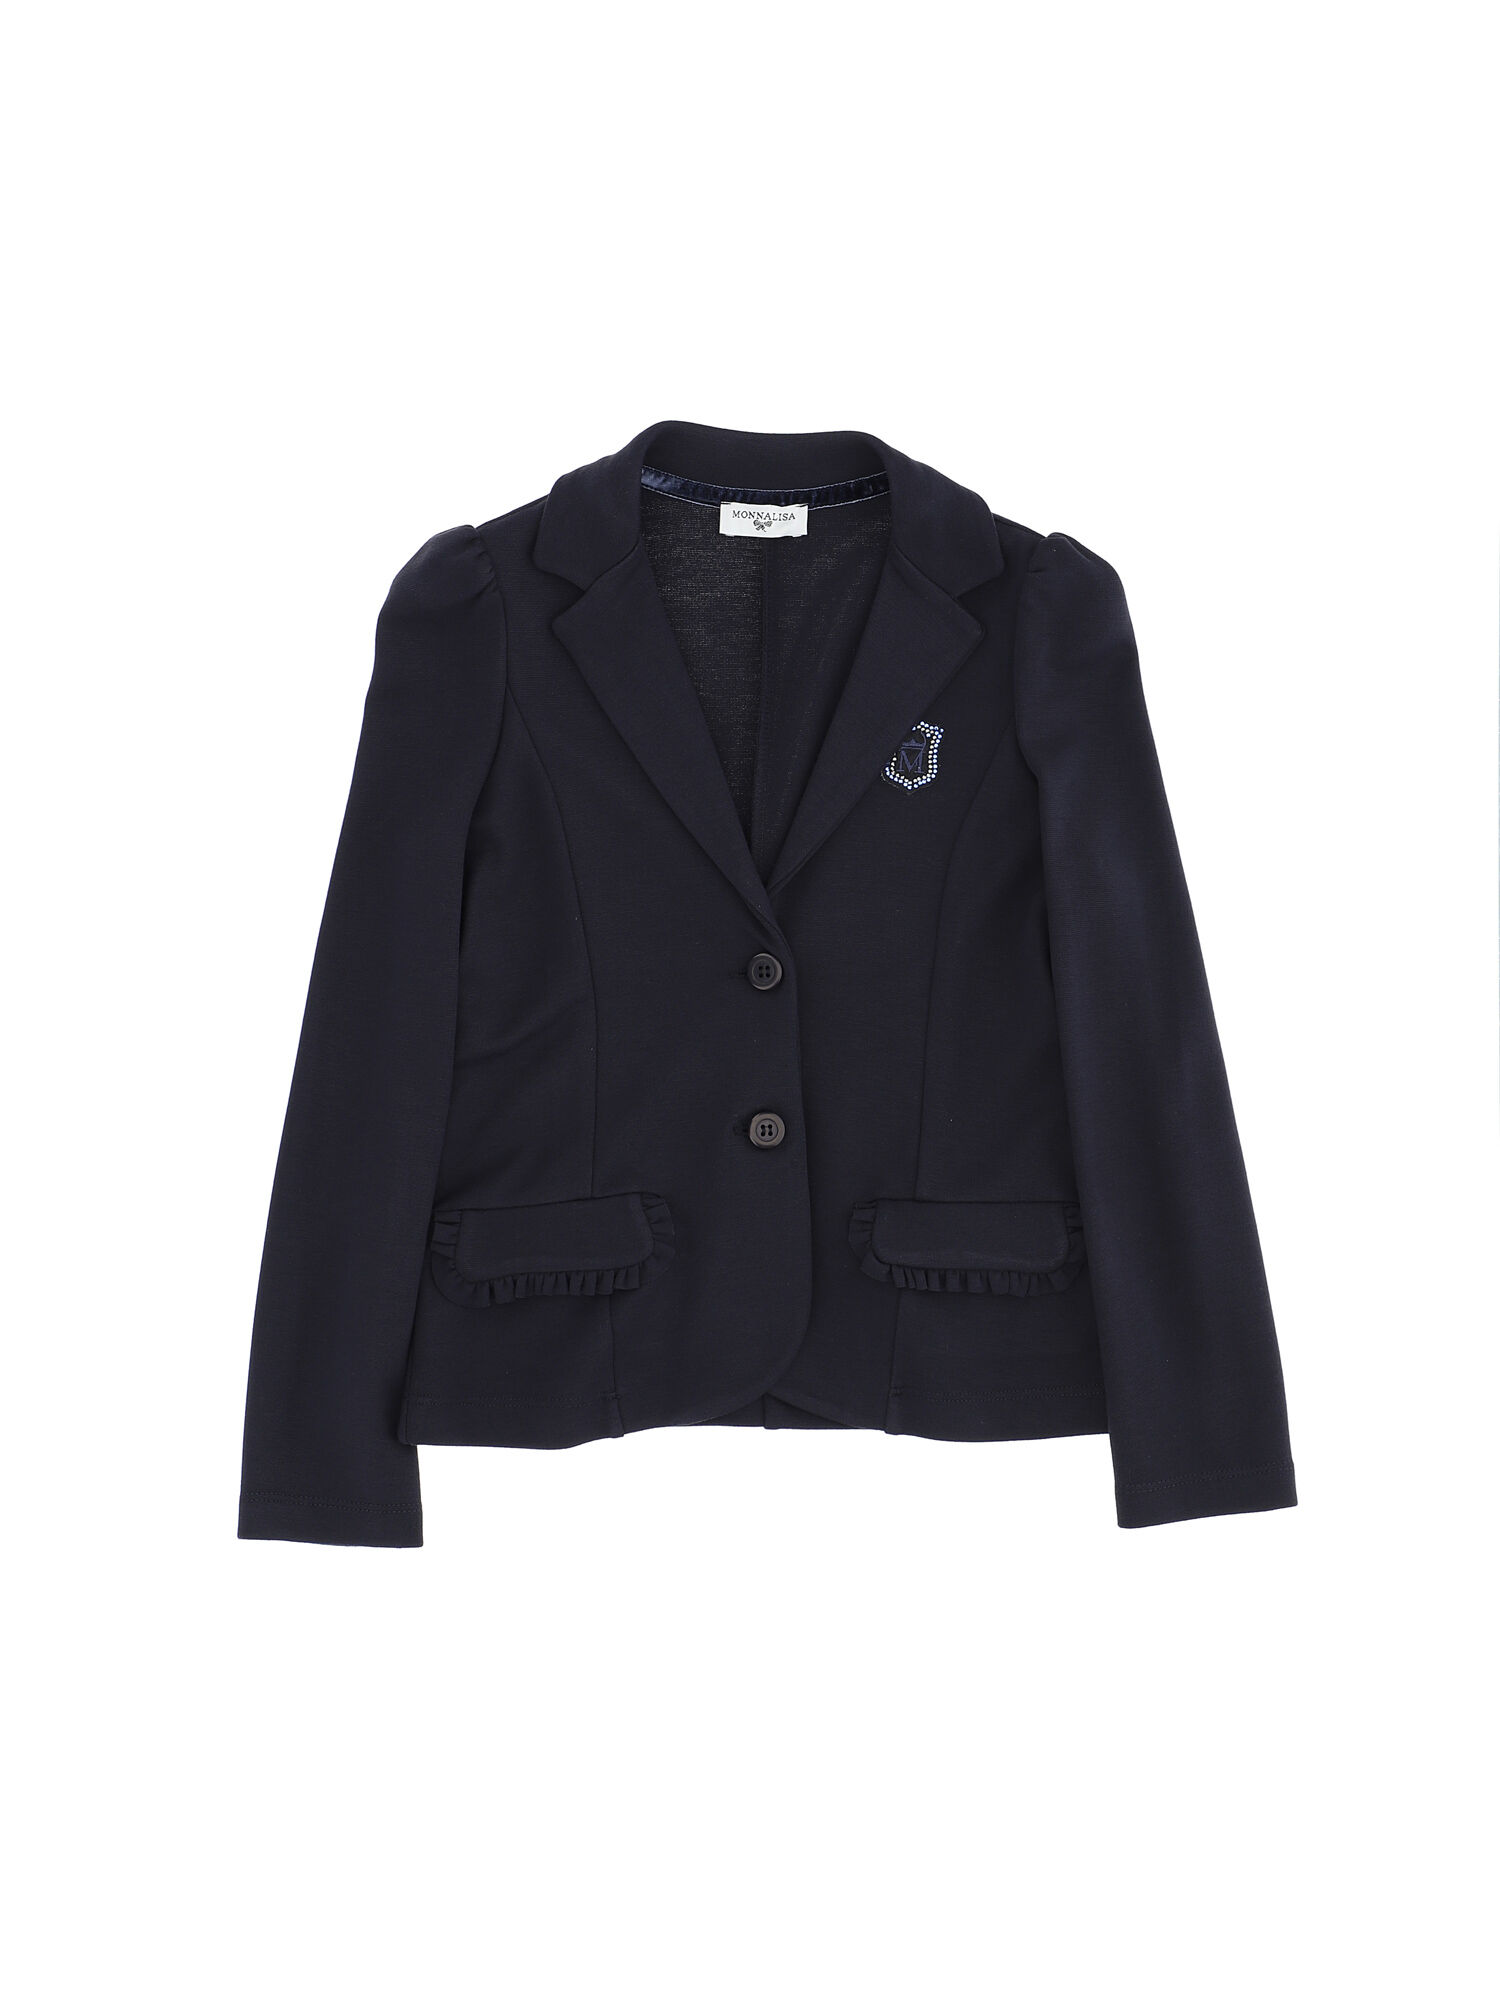 Monnalisa Girls Clothing Jackets Blazers Milano stitch blazer 